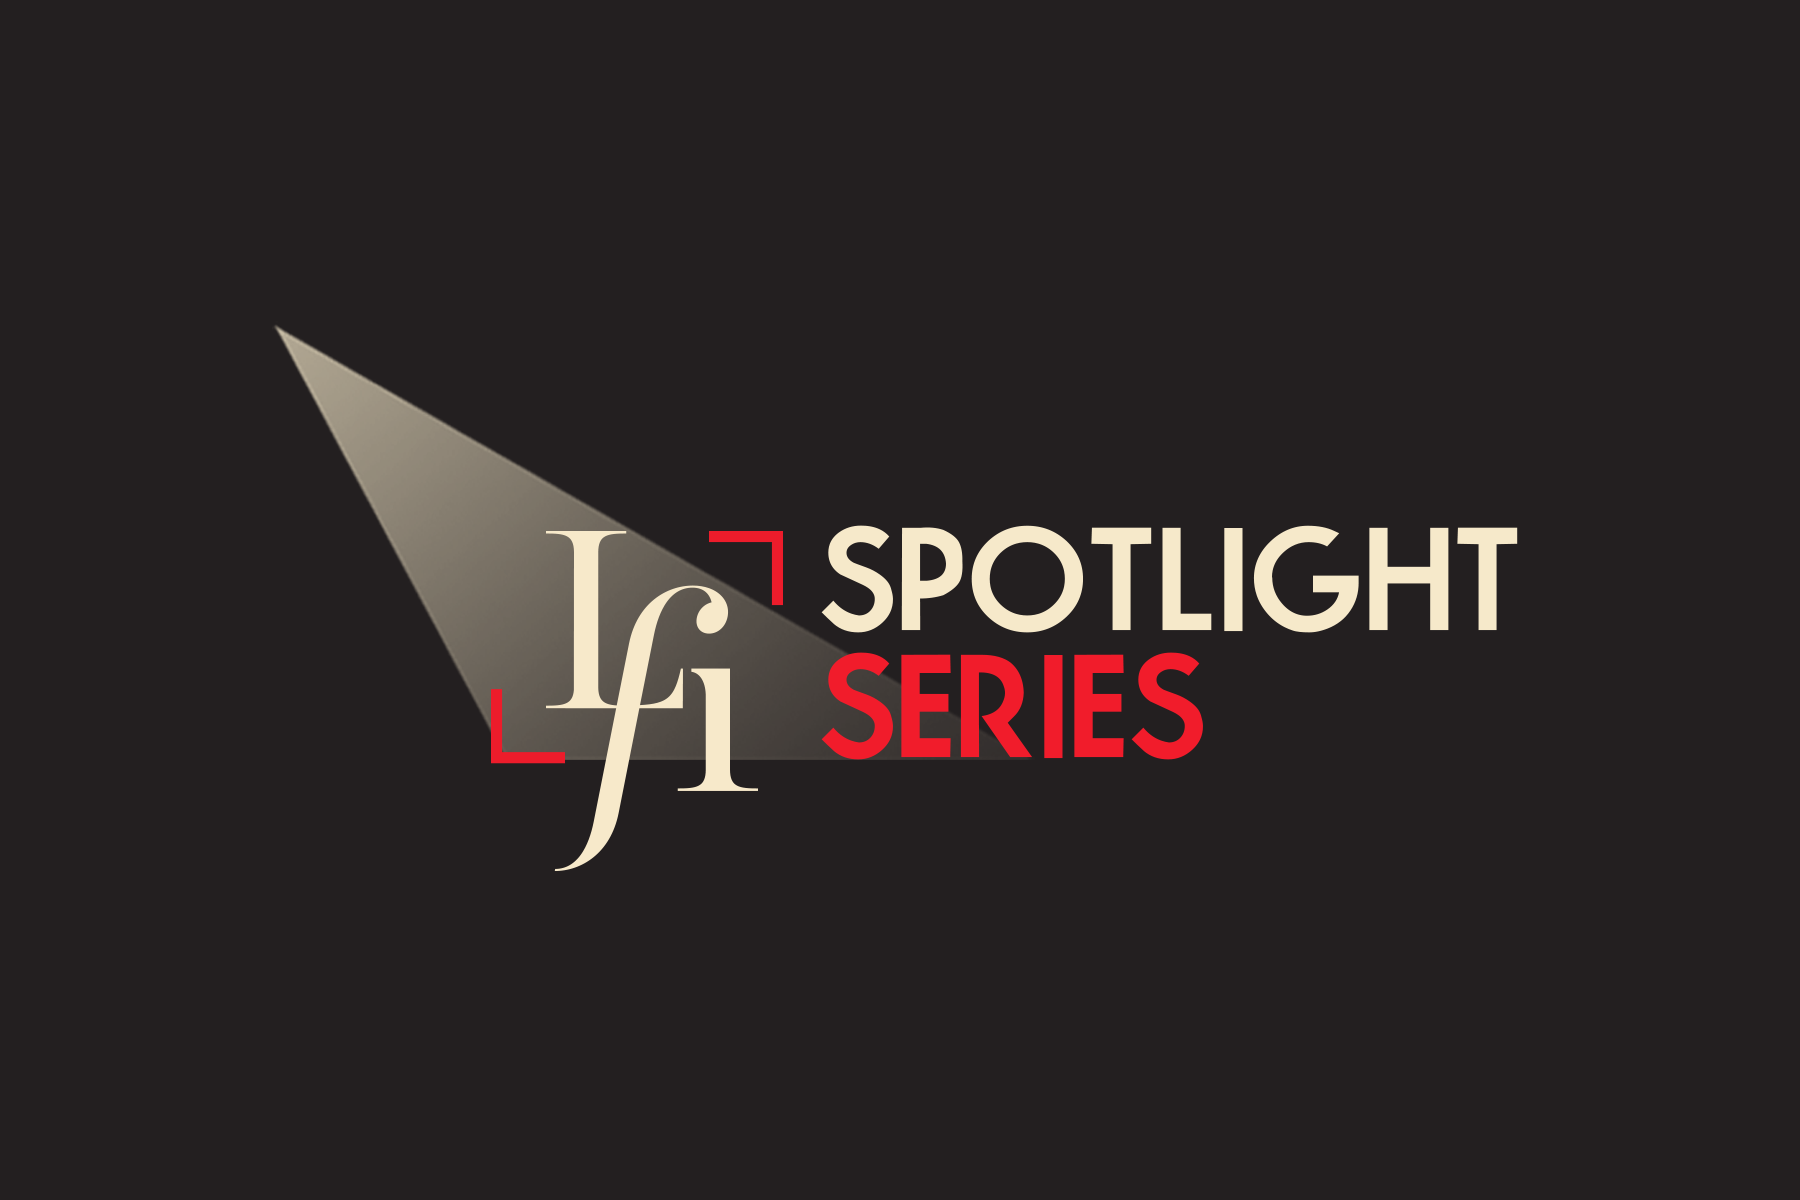 LFI Spotlight Series